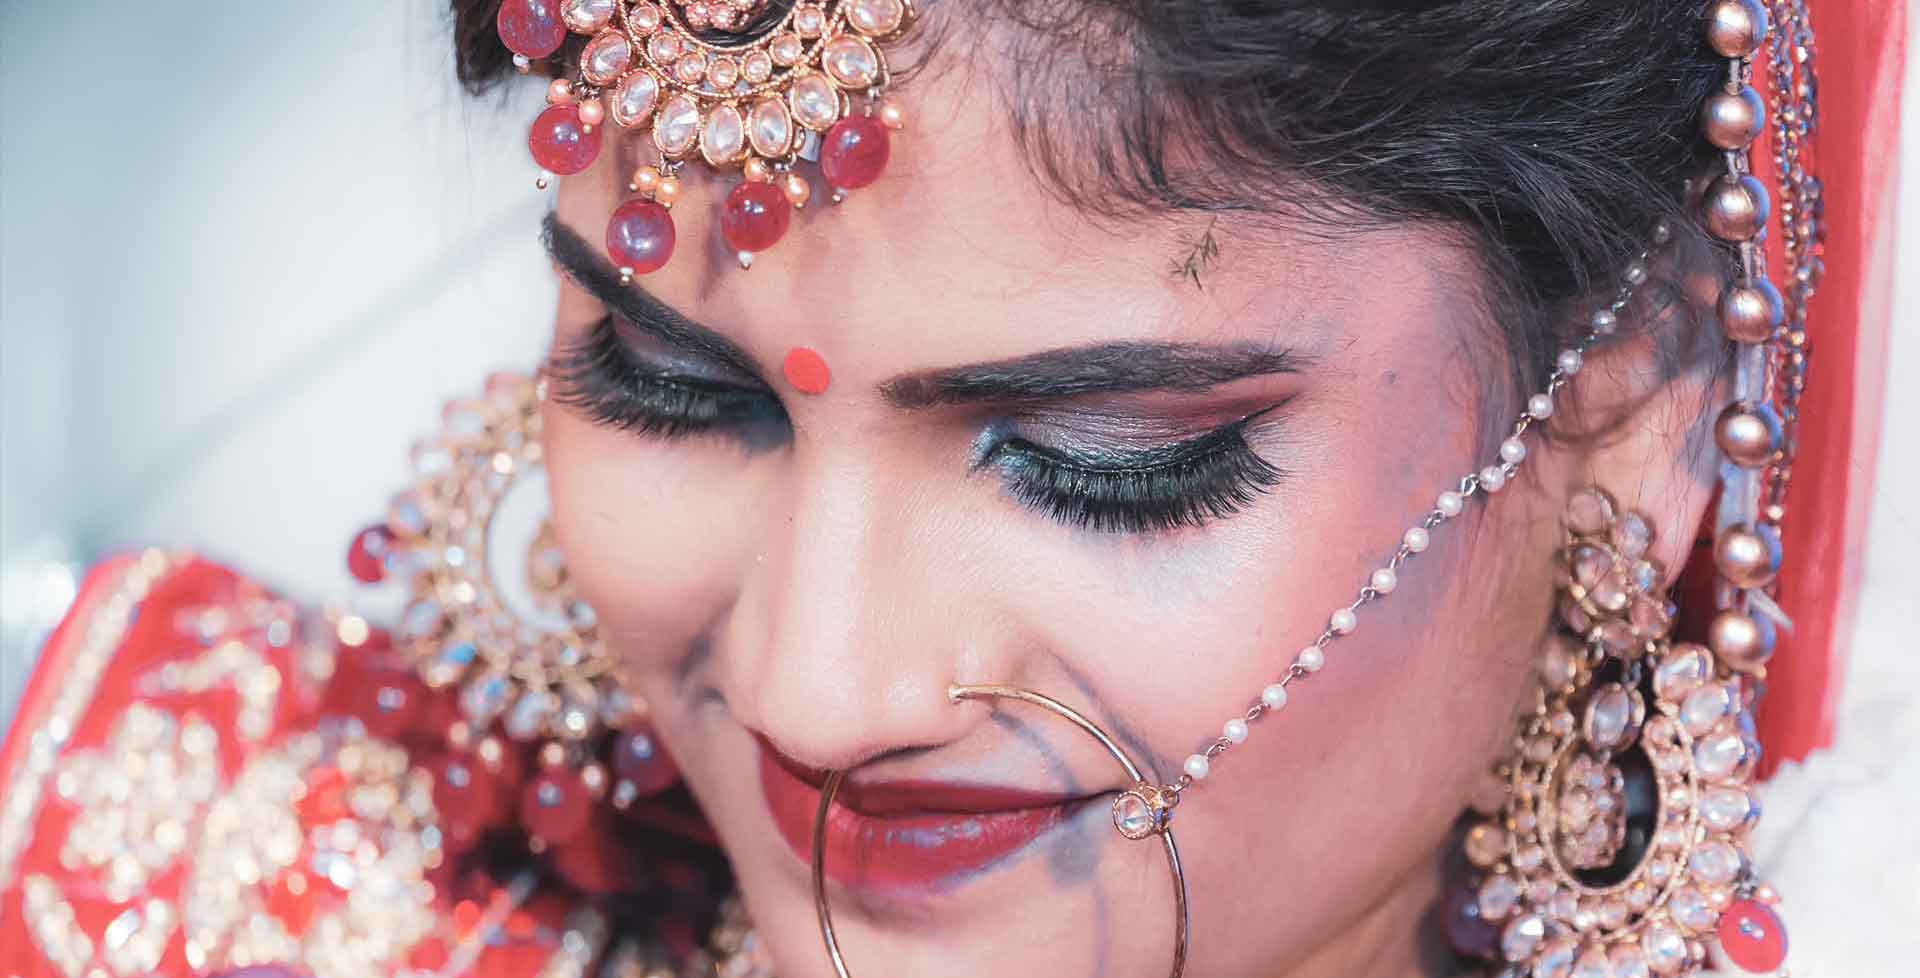 Best Destination Wedding photo shoot in Noida || Framographer Inc.